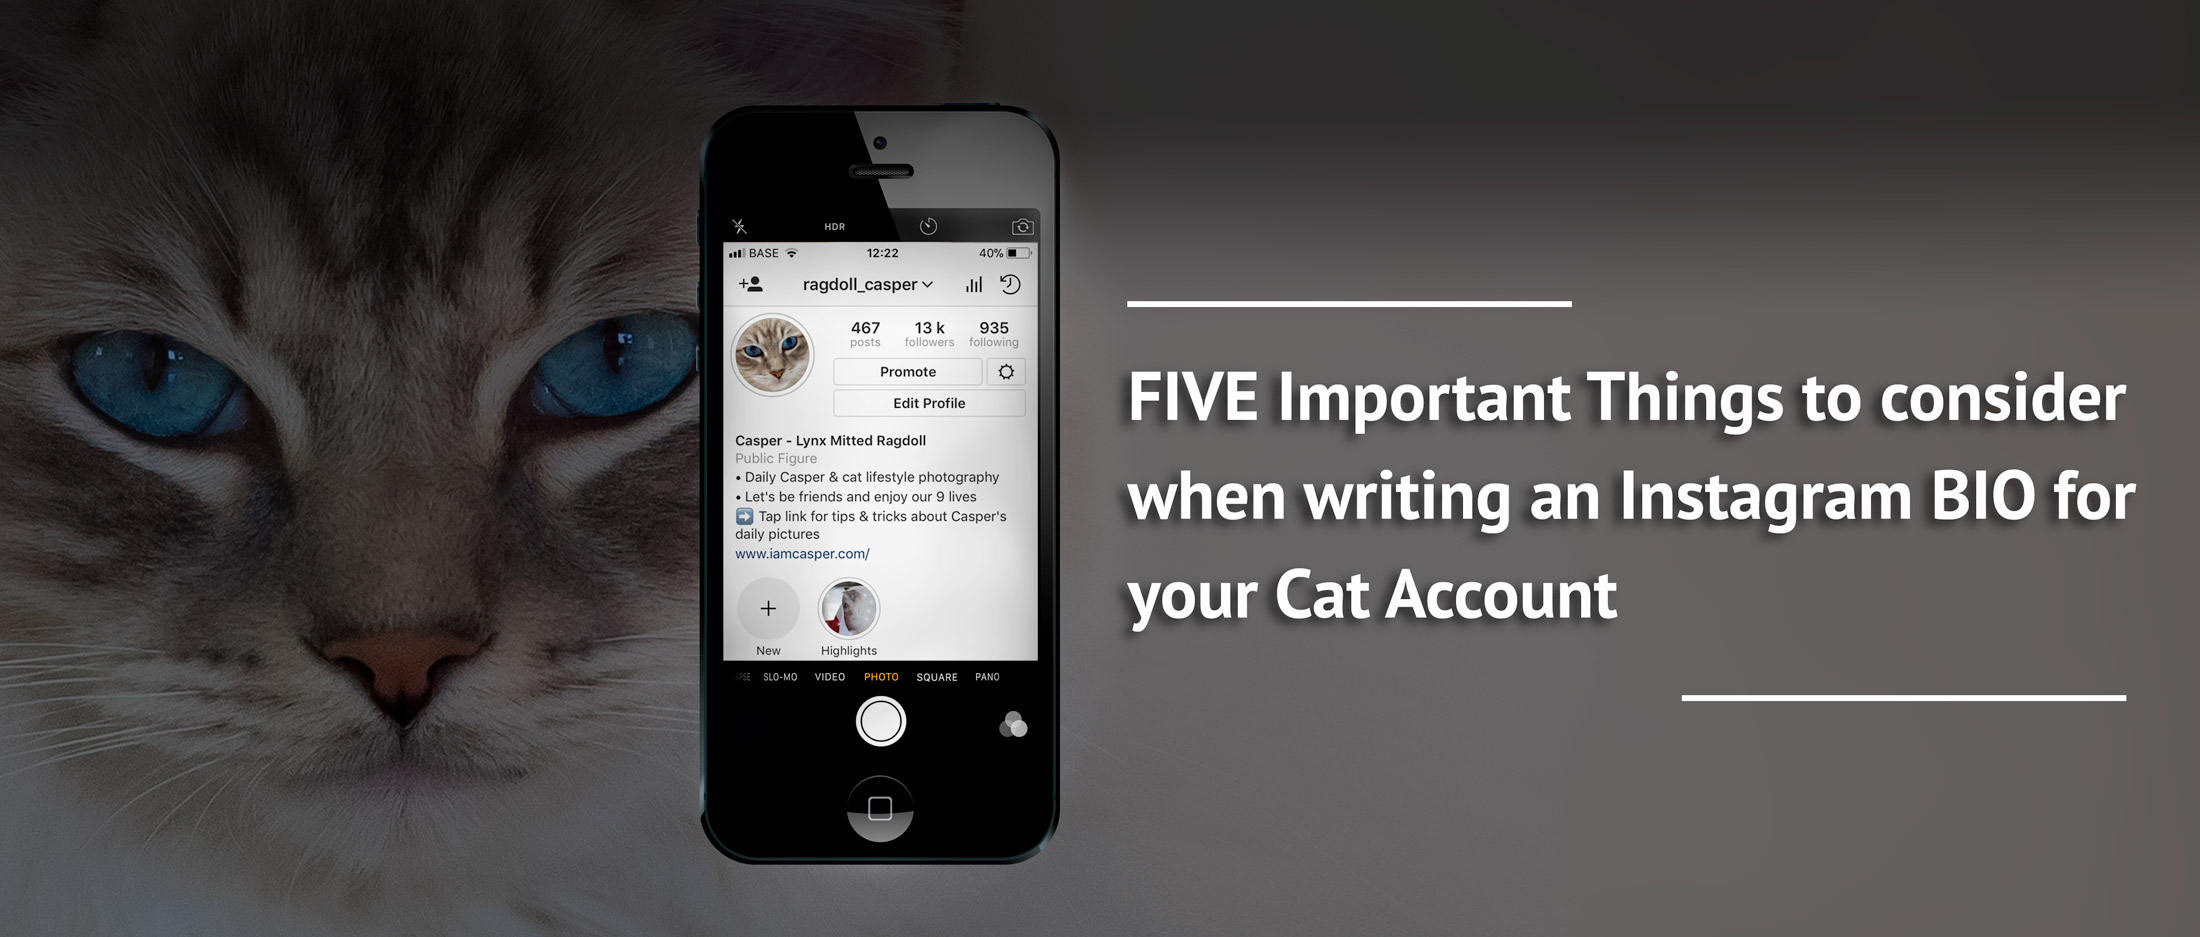 ragdoll cat casper bio on instagram write five-important-things-to-consider-writing-bio-instagram-cat-account